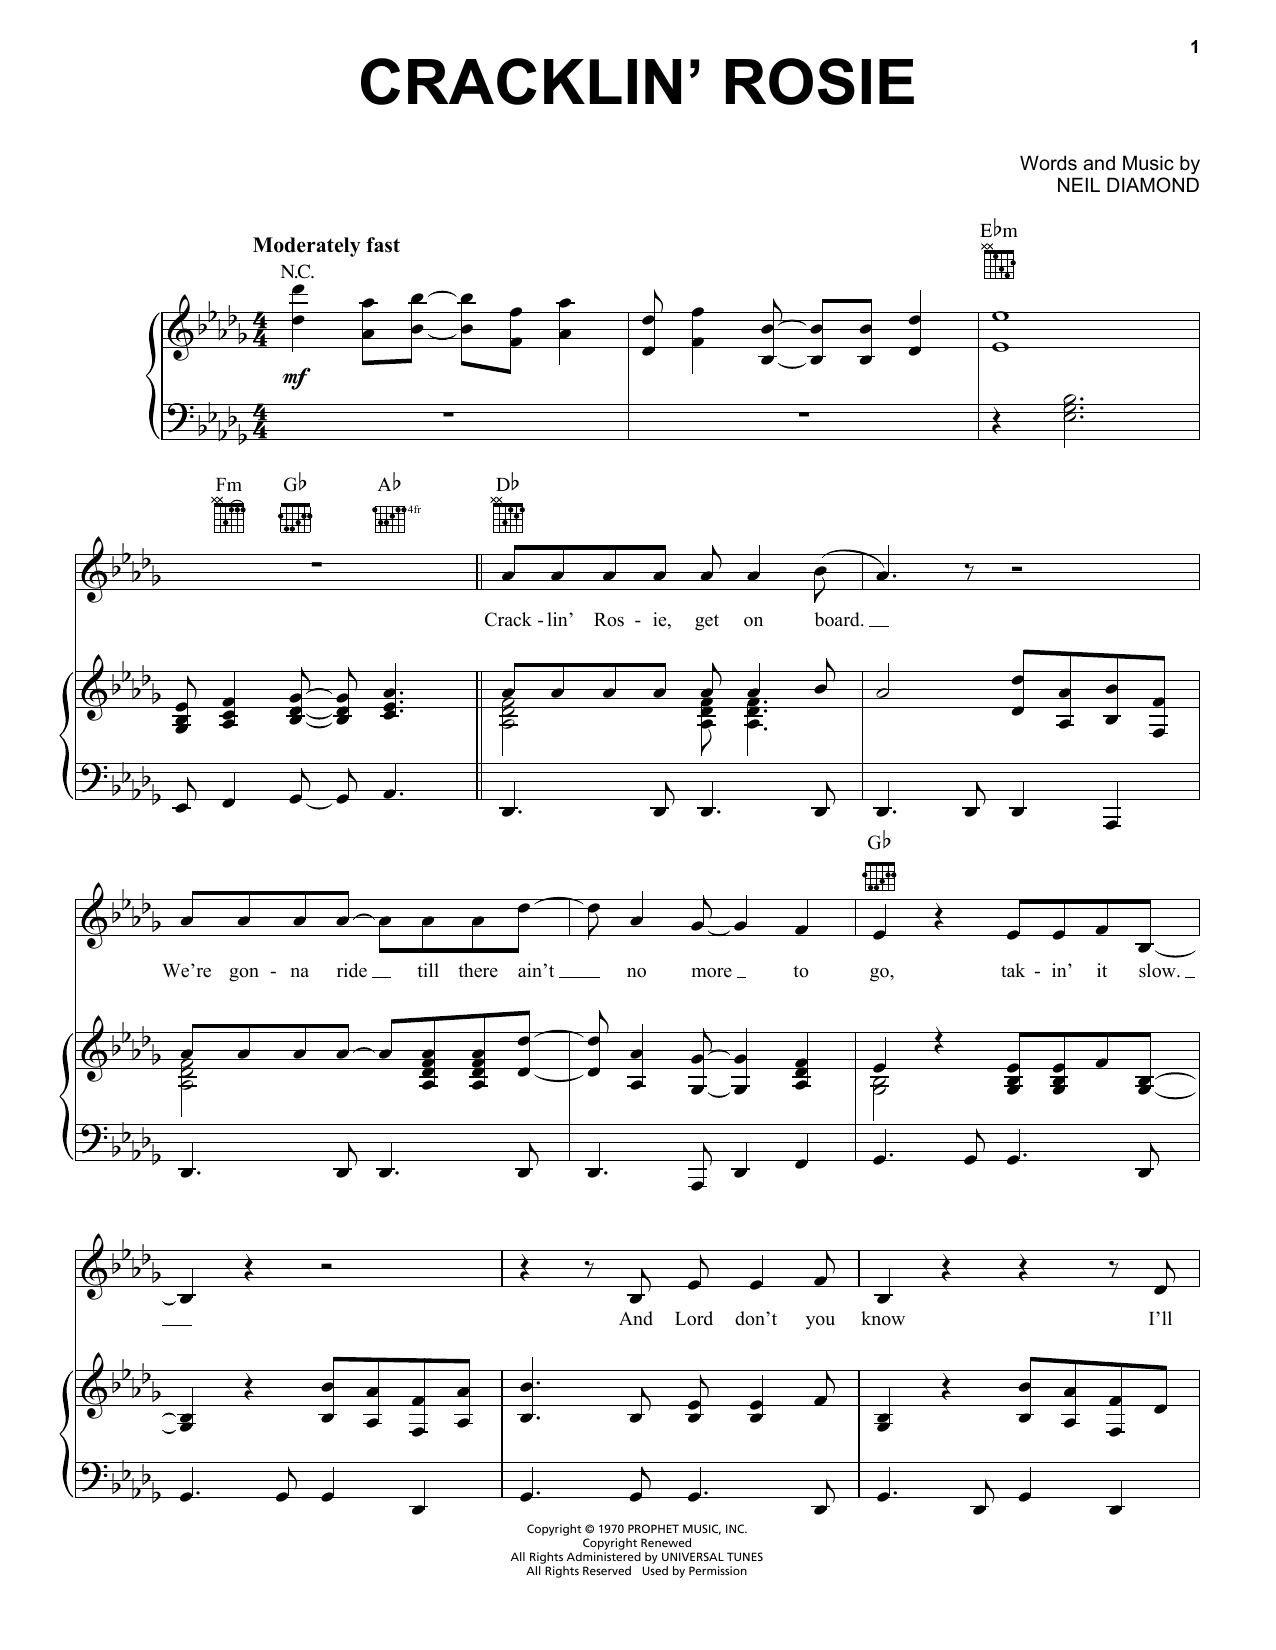 Neil Diamond Cracklin' Rosie Sheet Music Notes & Chords for Tenor Saxophone - Download or Print PDF